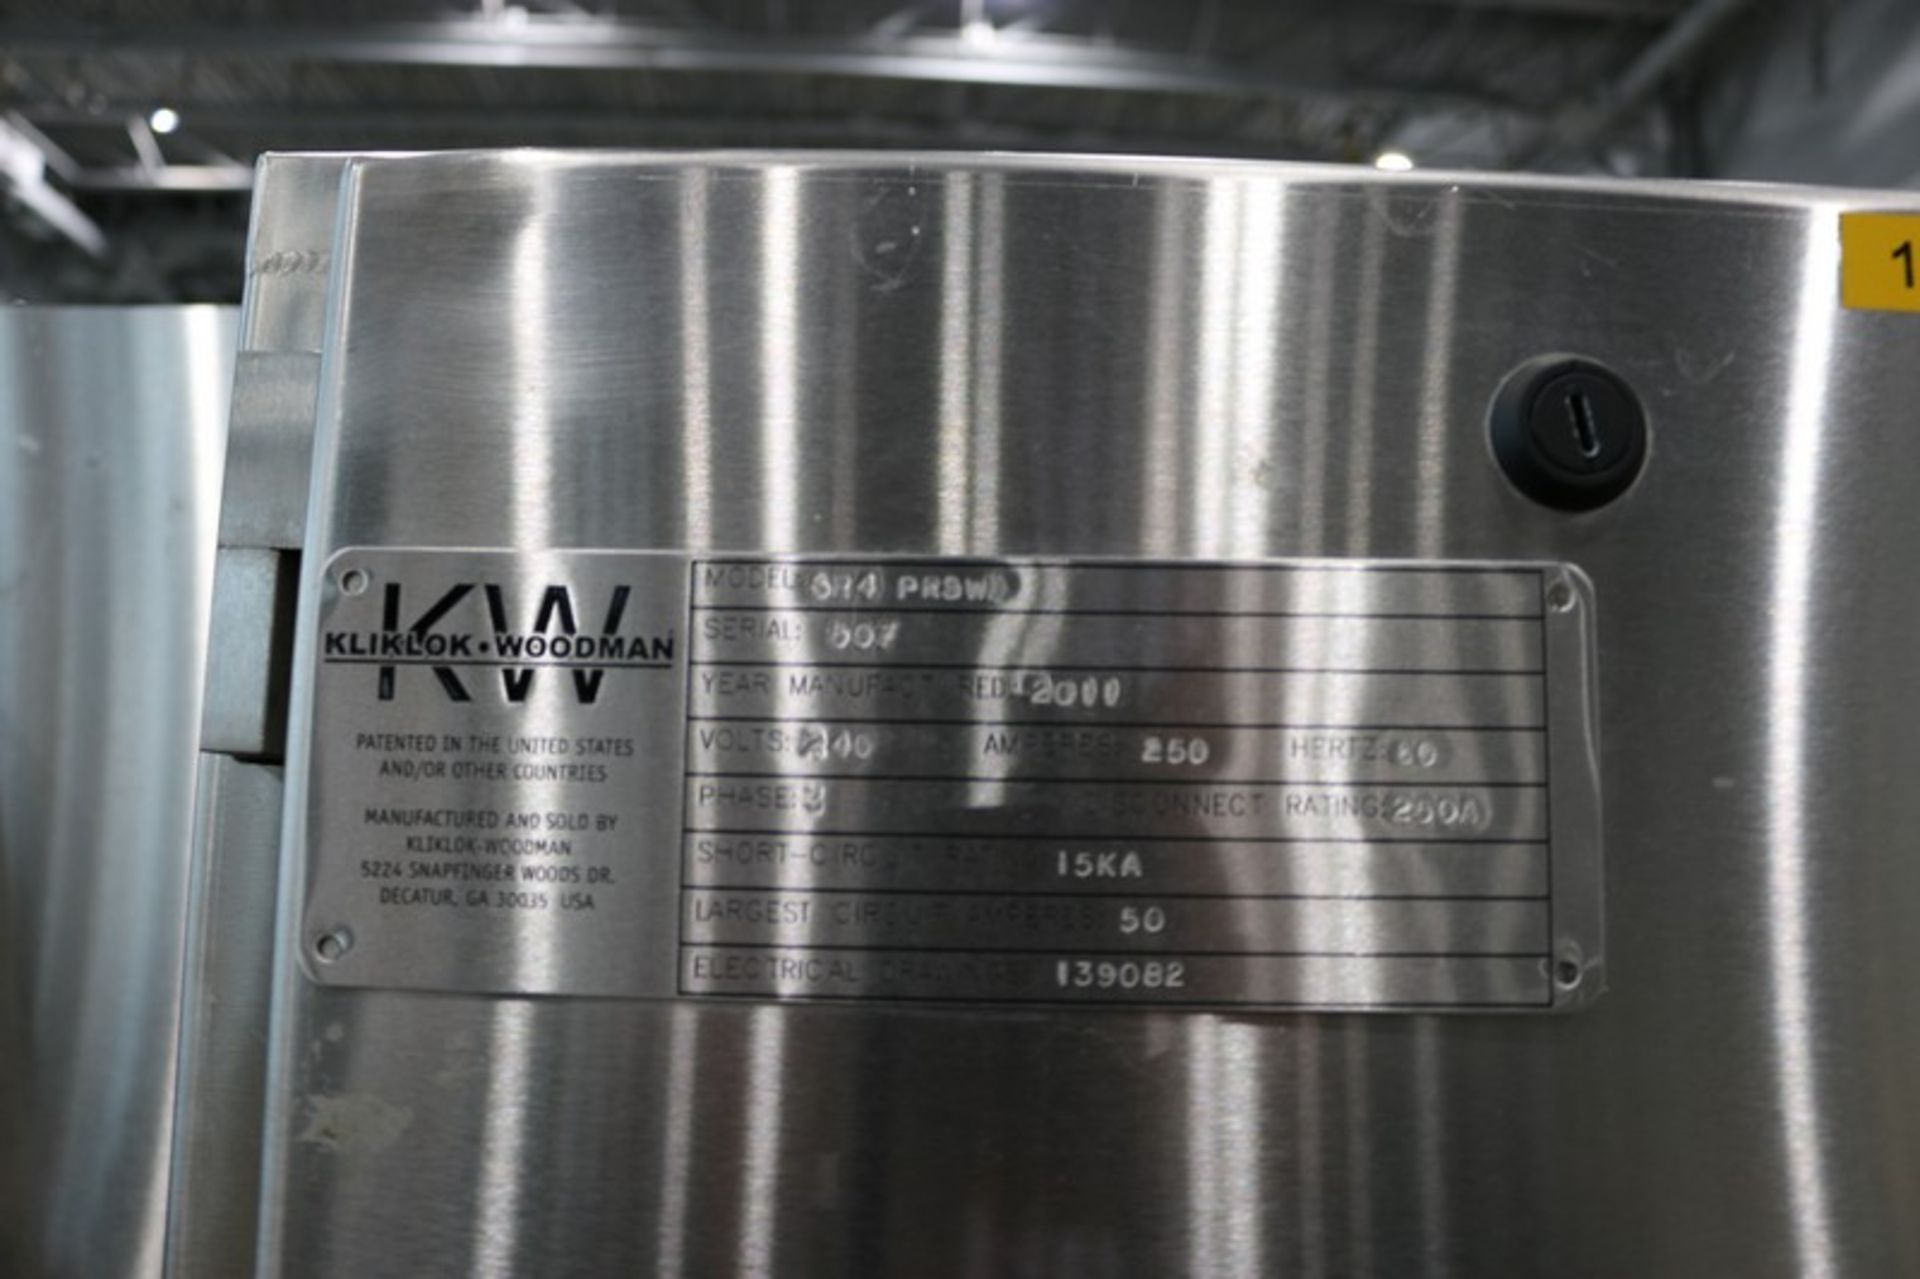 2011 Kliklok-Woodman Tray Former,M/N SR4 PRSWD, S/N 507, 240 Volts, 3 Phase(INV#84793)(Located @ the - Image 8 of 11